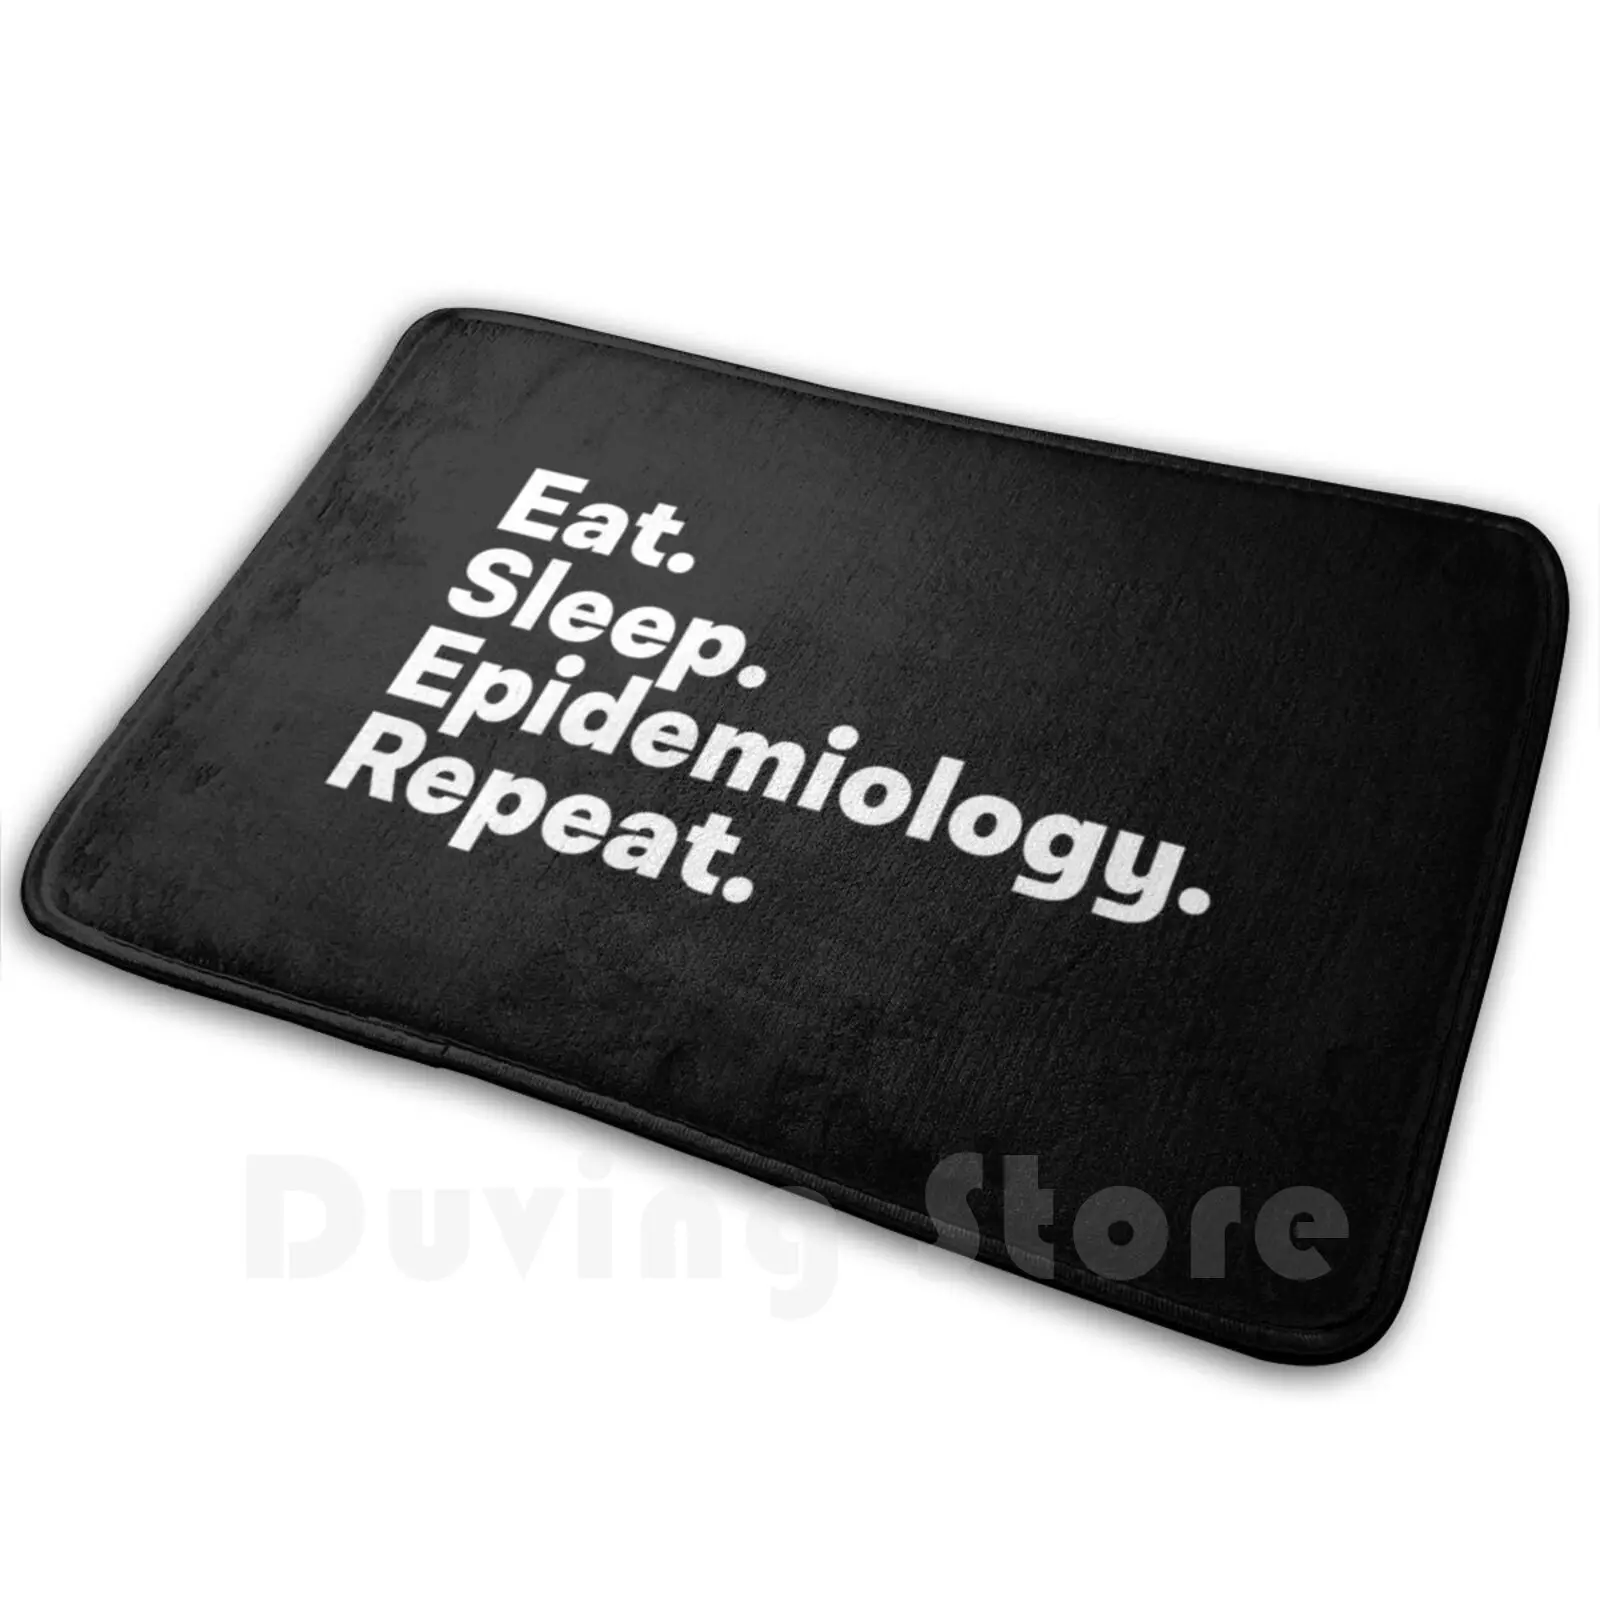 Eat Sleep Epidemiology Repeat Carpet Mat Rug Cushion Soft Non-Slip Epidemiologist Epidemiologists Epidemiology Public